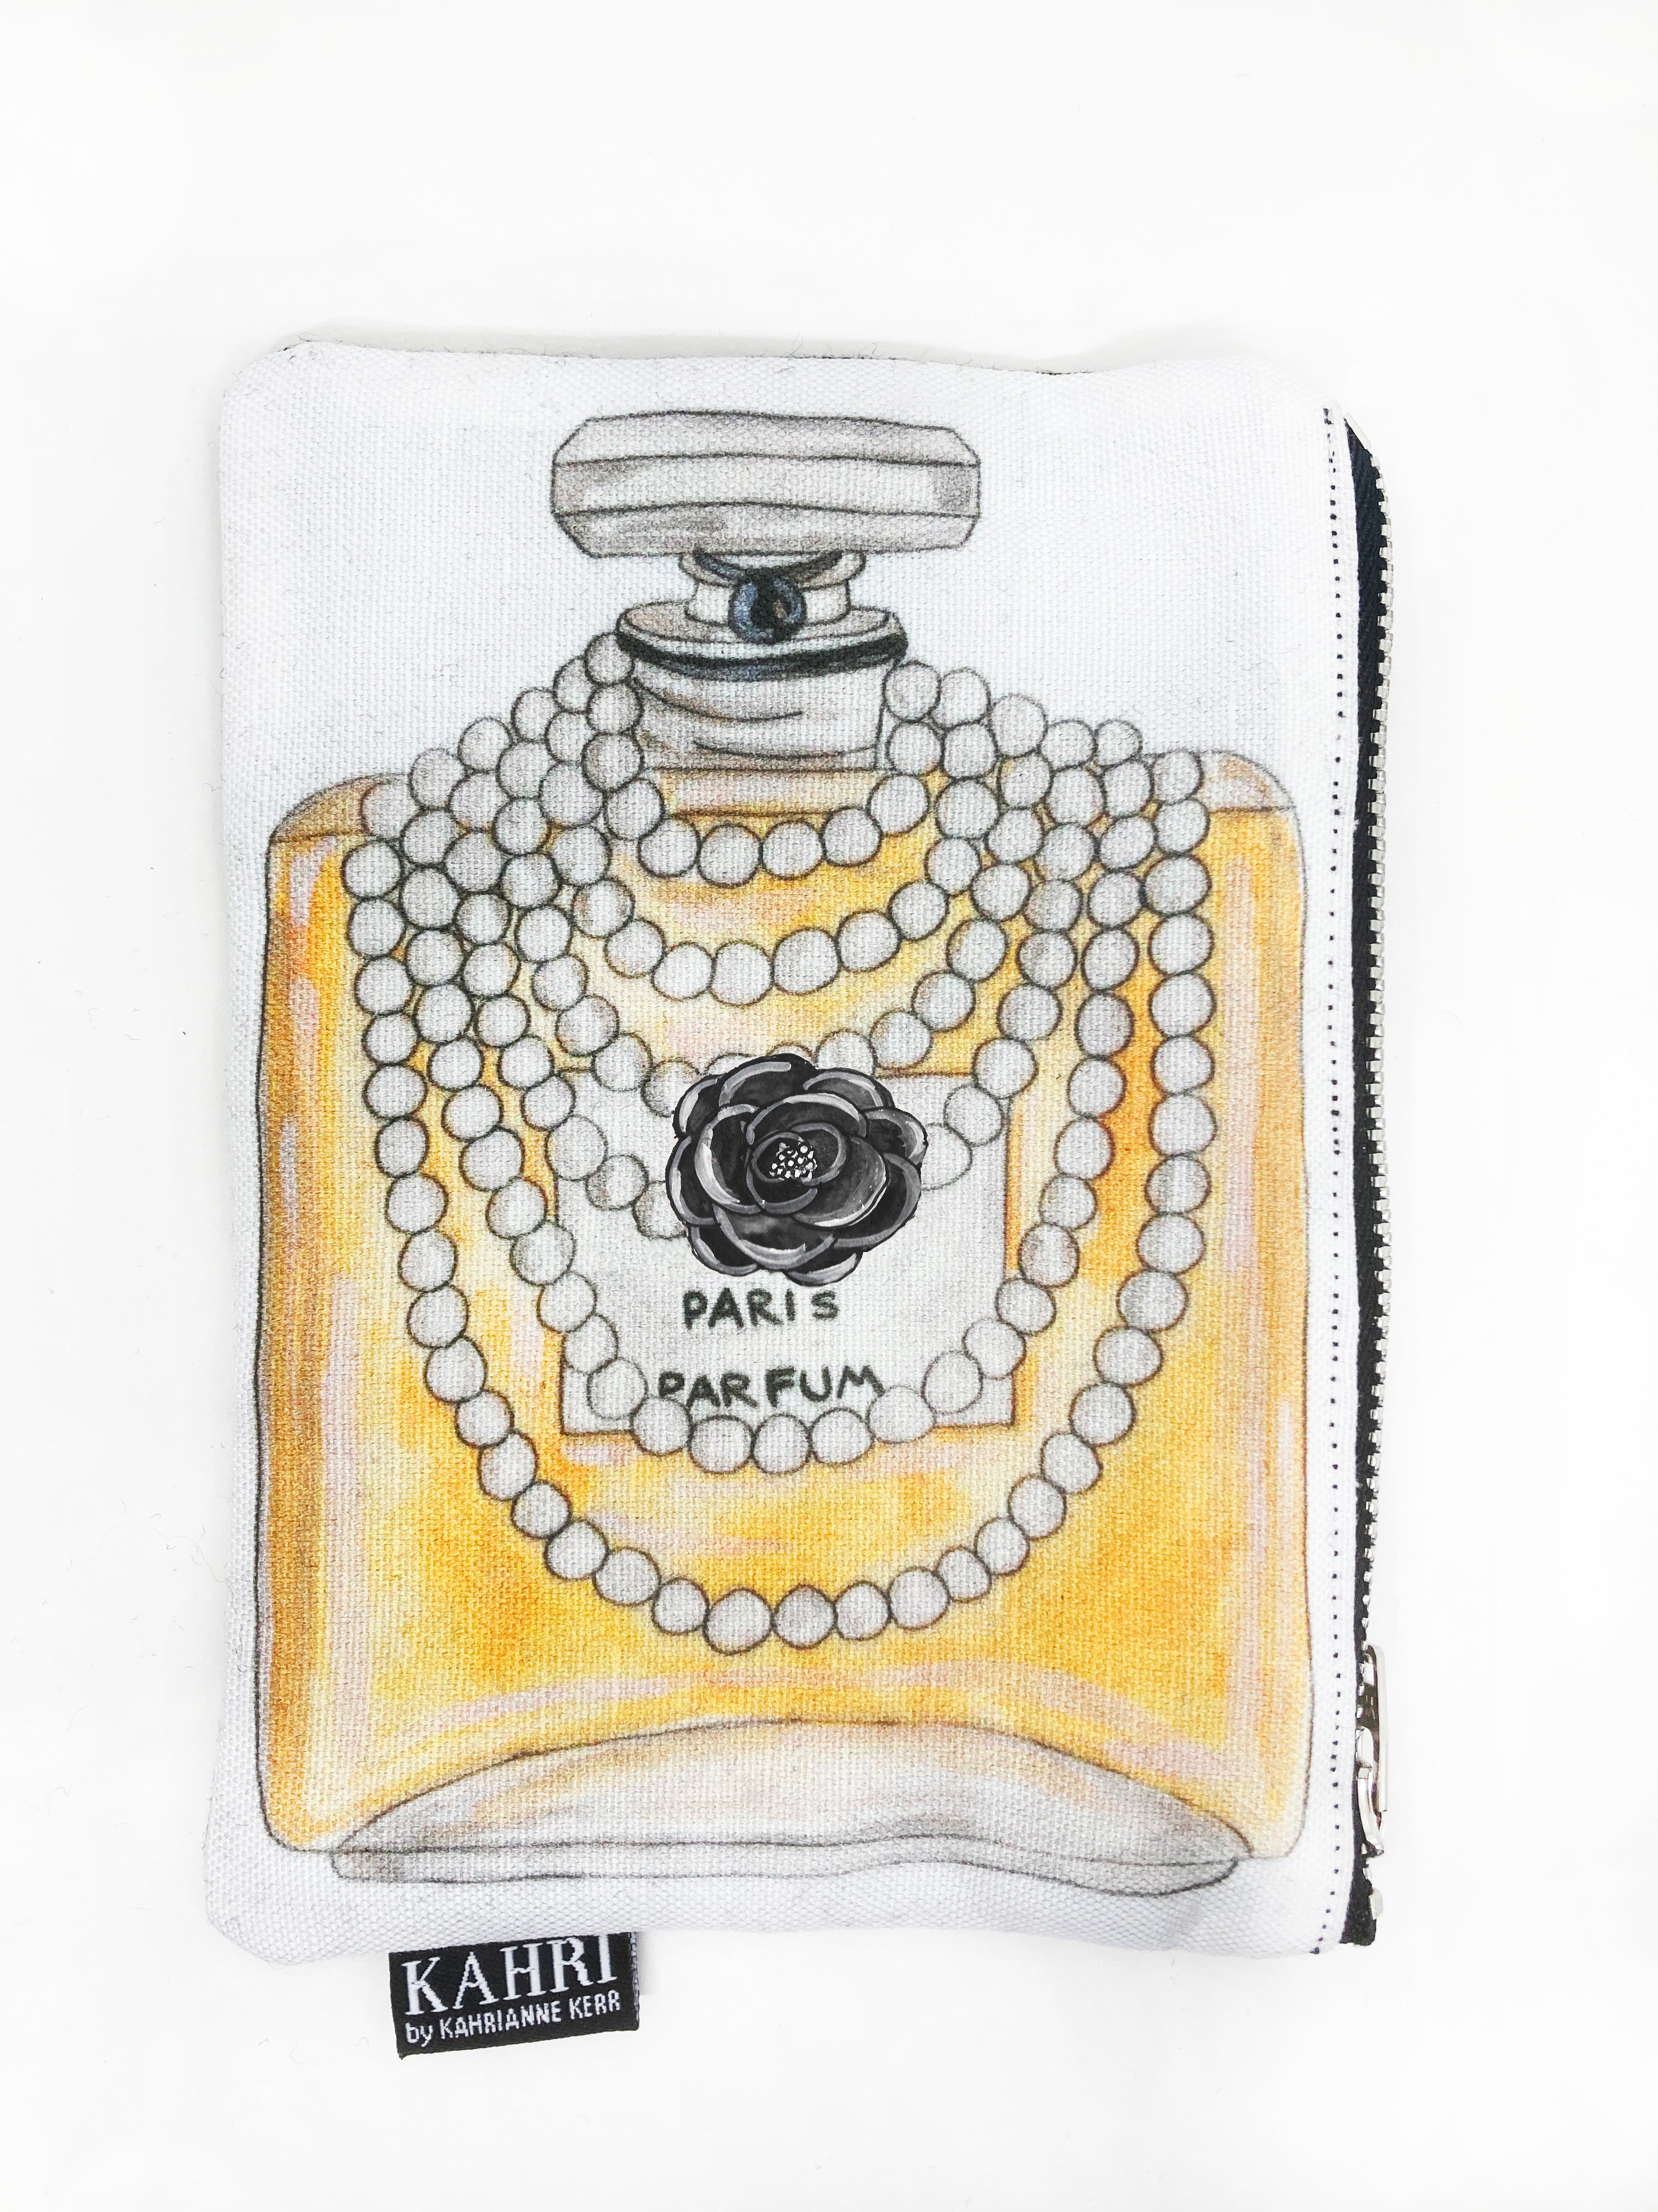 chanel perfume purse